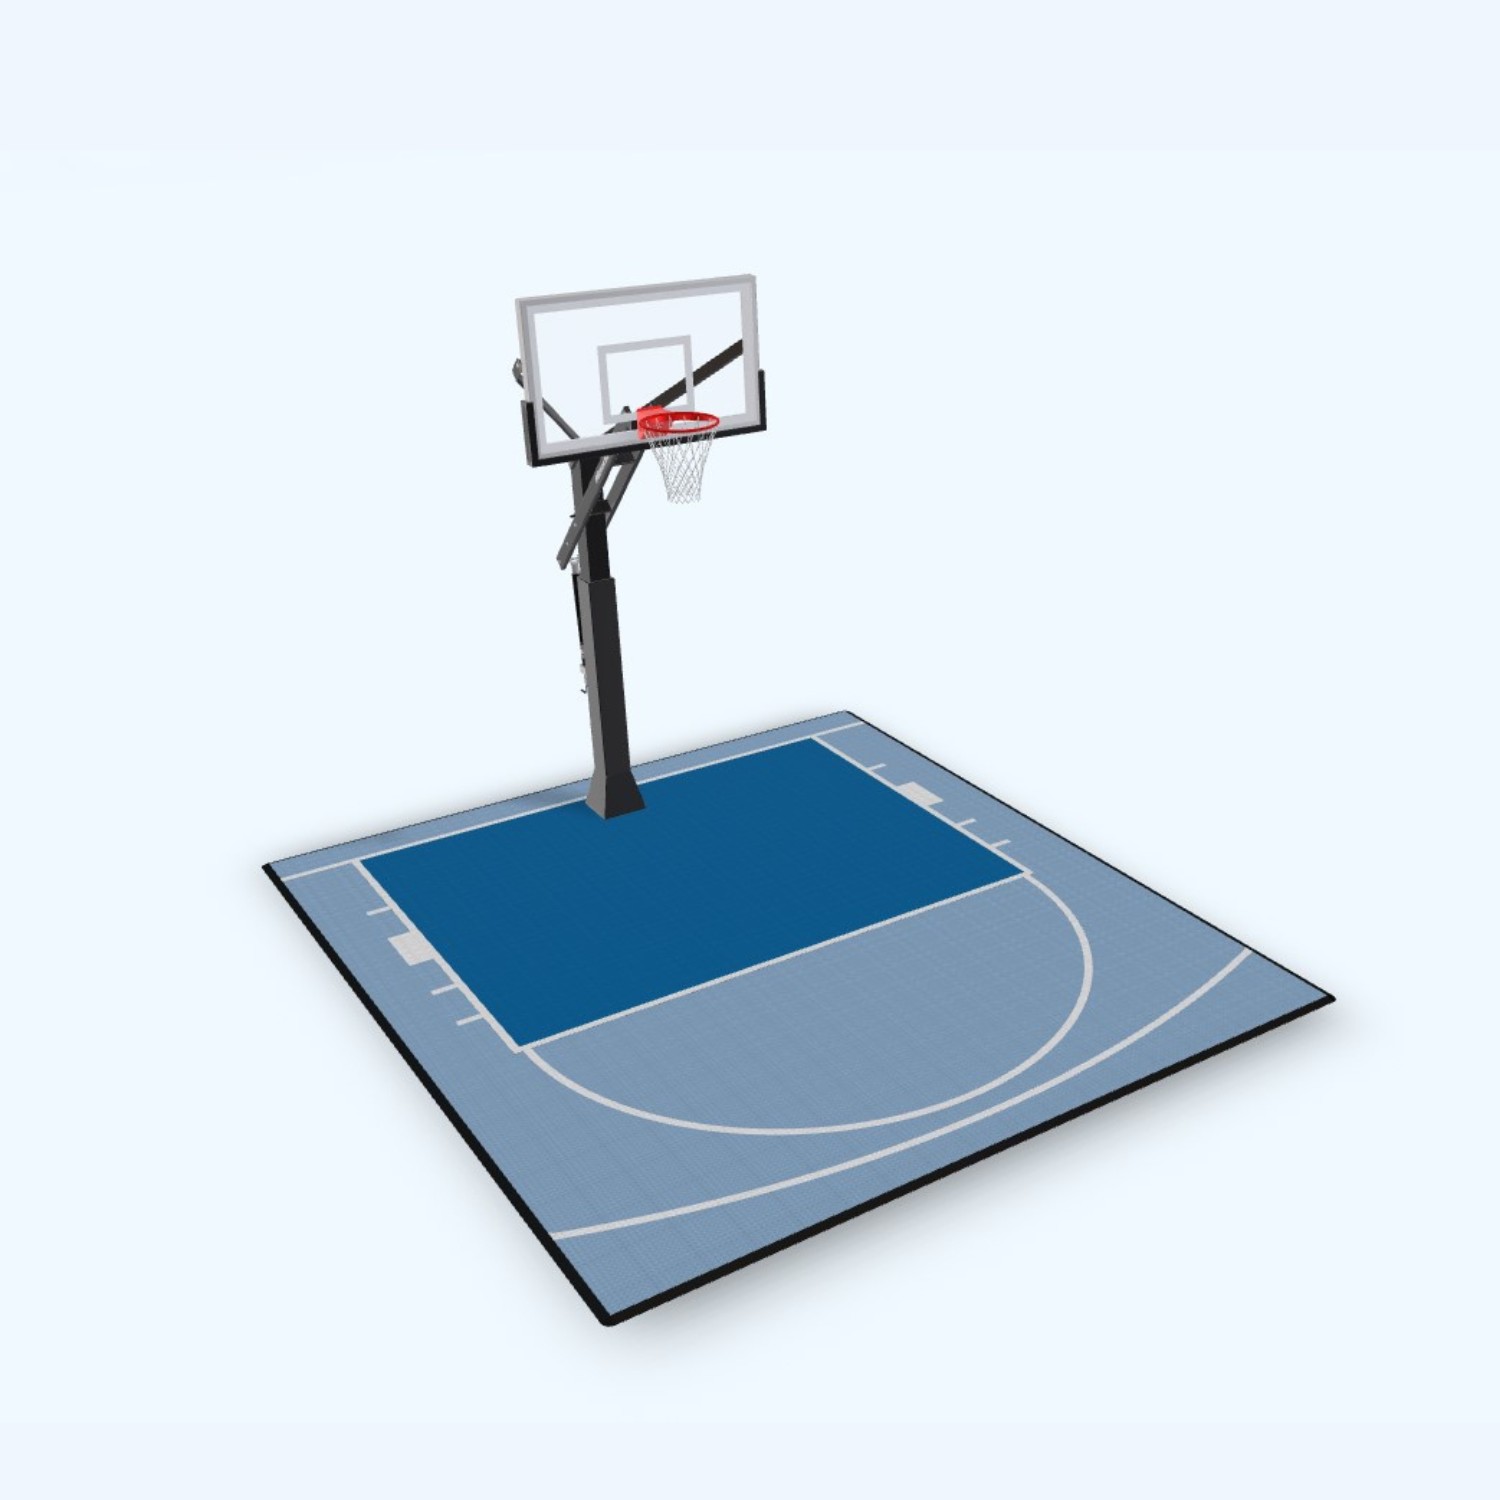 https://www.holly-sport.com/wp-content/uploads/2021/08/terrain-de-basket-5x5m-1.jpg